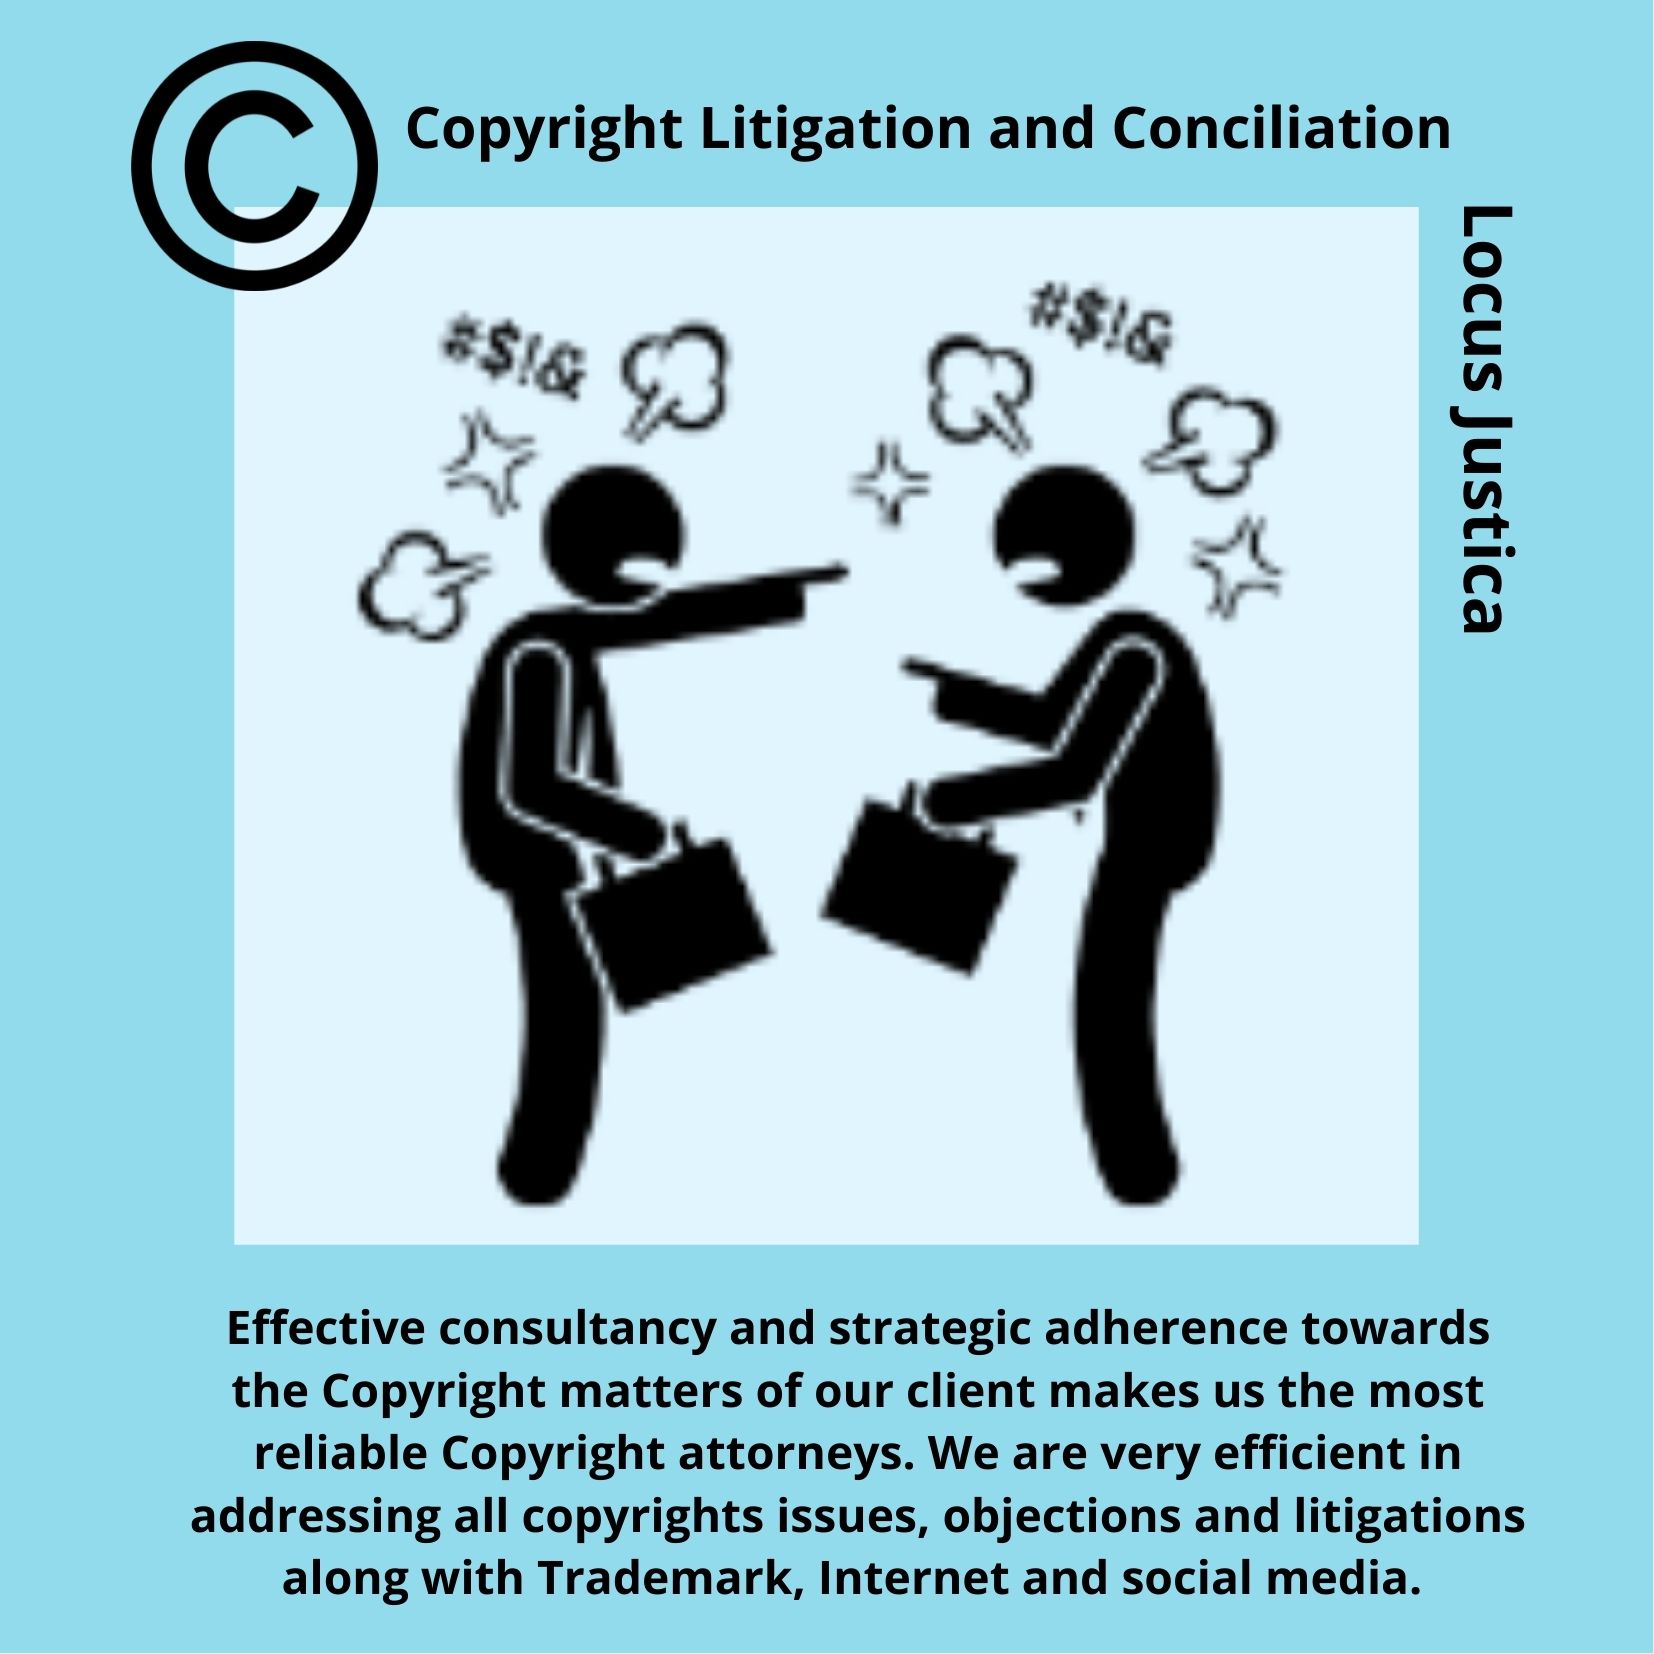 Copyright litigation and conciliation